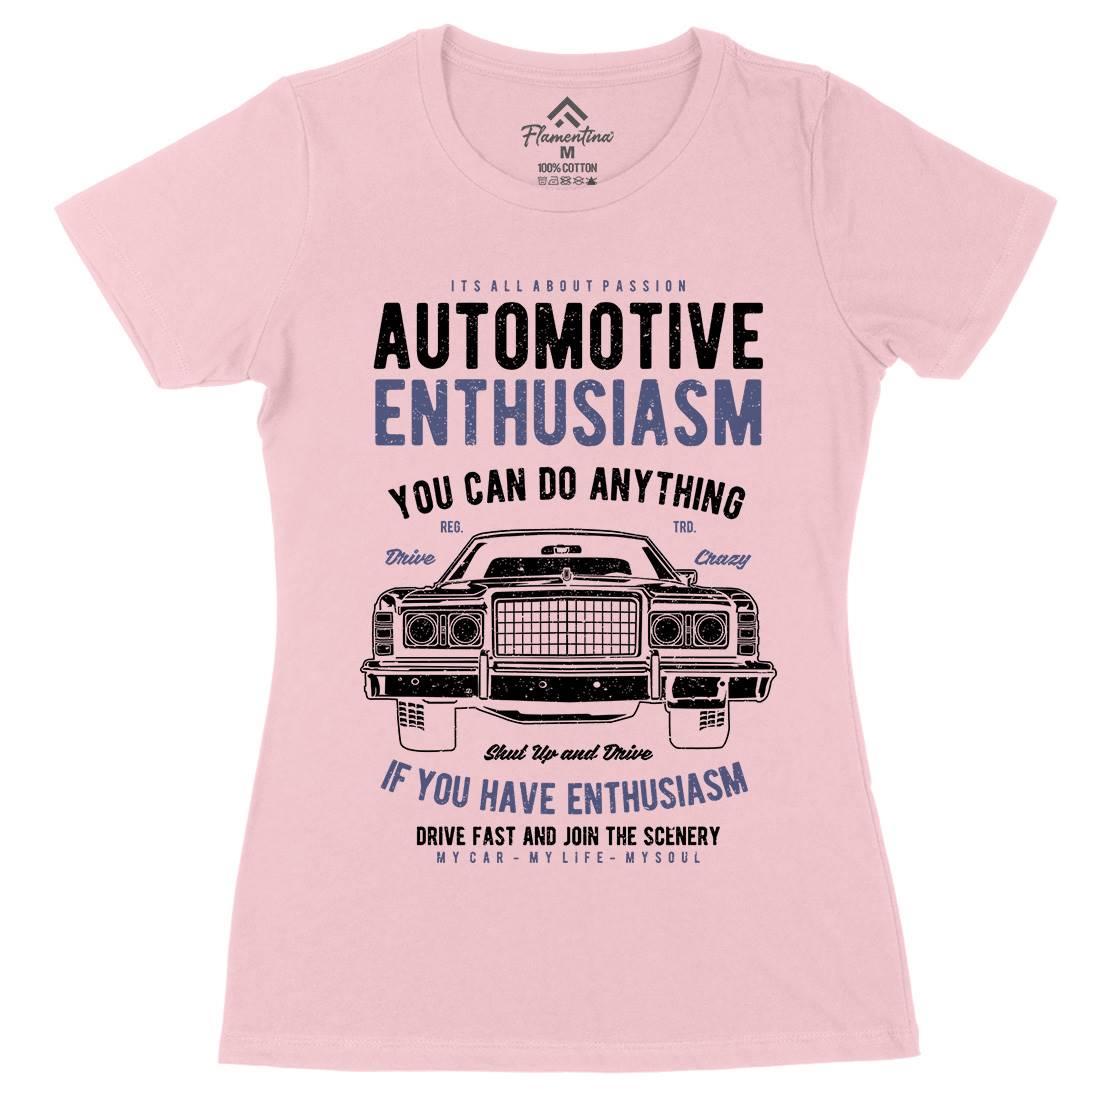 Automotive Enthusiasm Womens Organic Crew Neck T-Shirt Cars A614